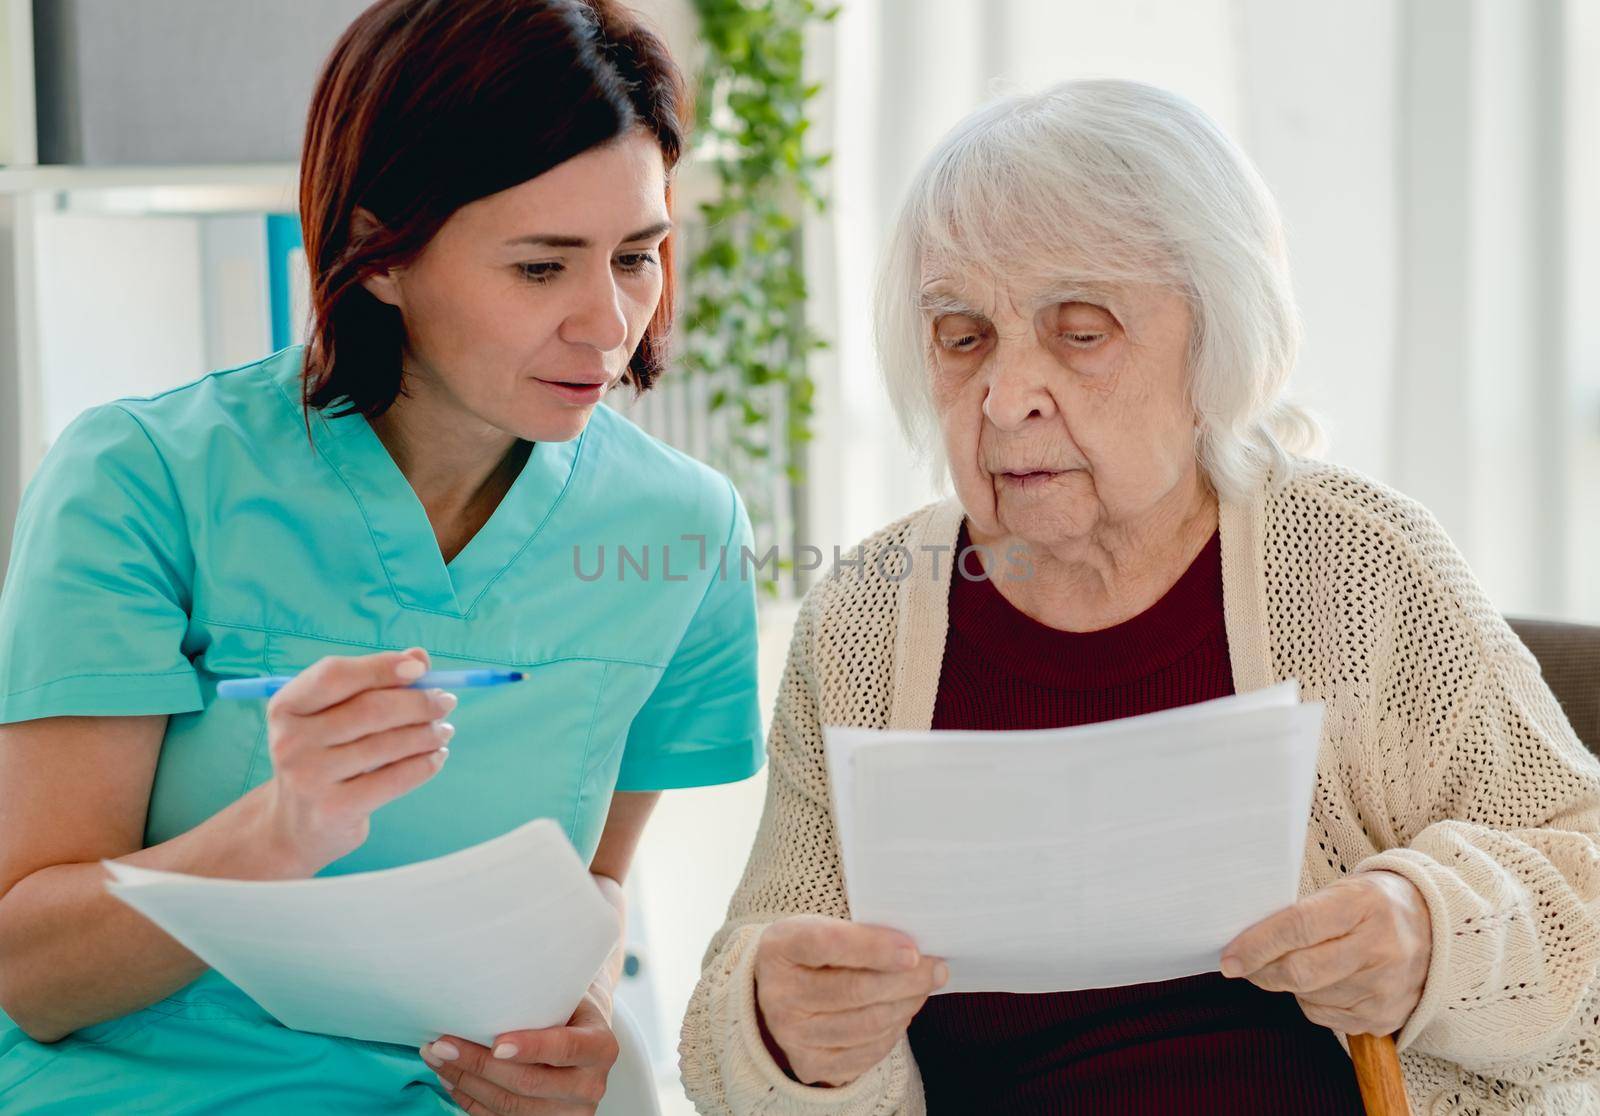 Nurse talking with elderly woman patient during visit in nursing home